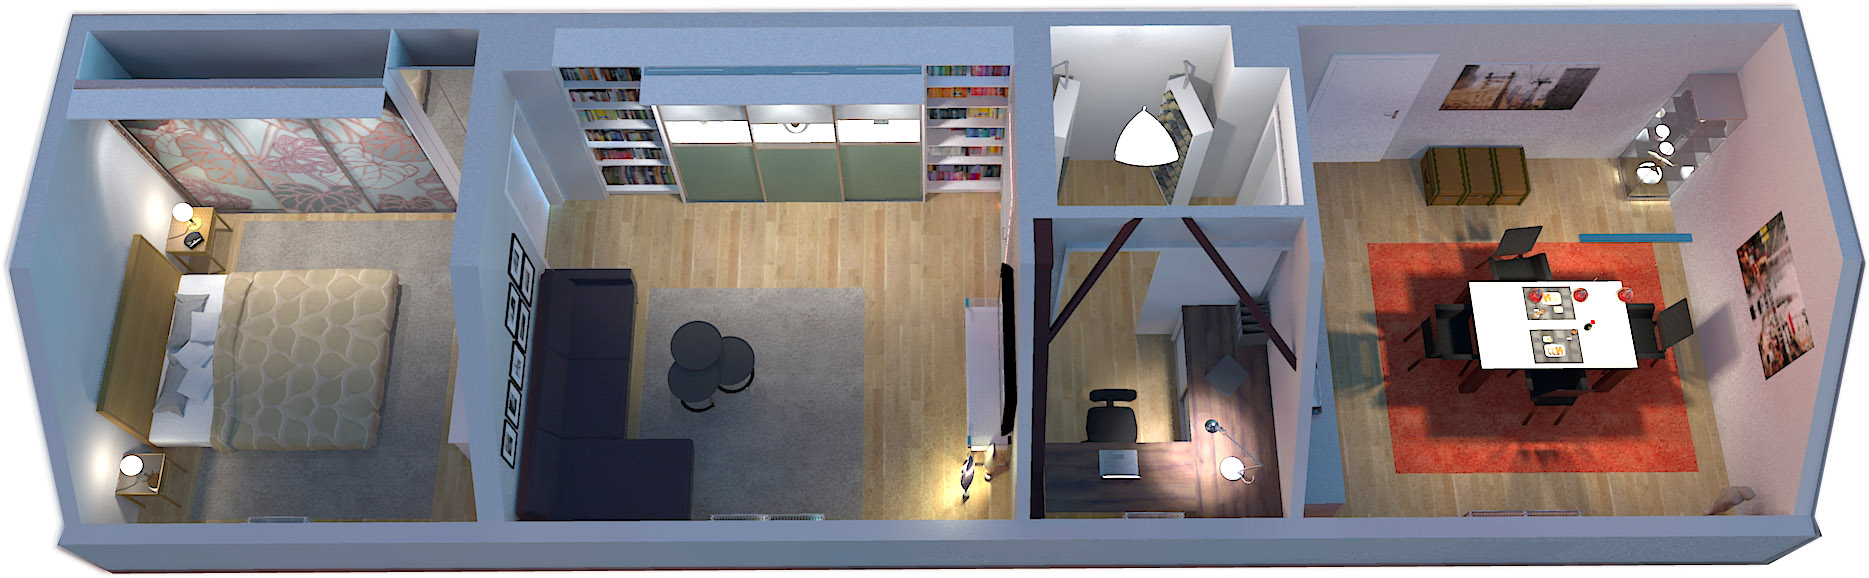 plan-render-apartment.jpg